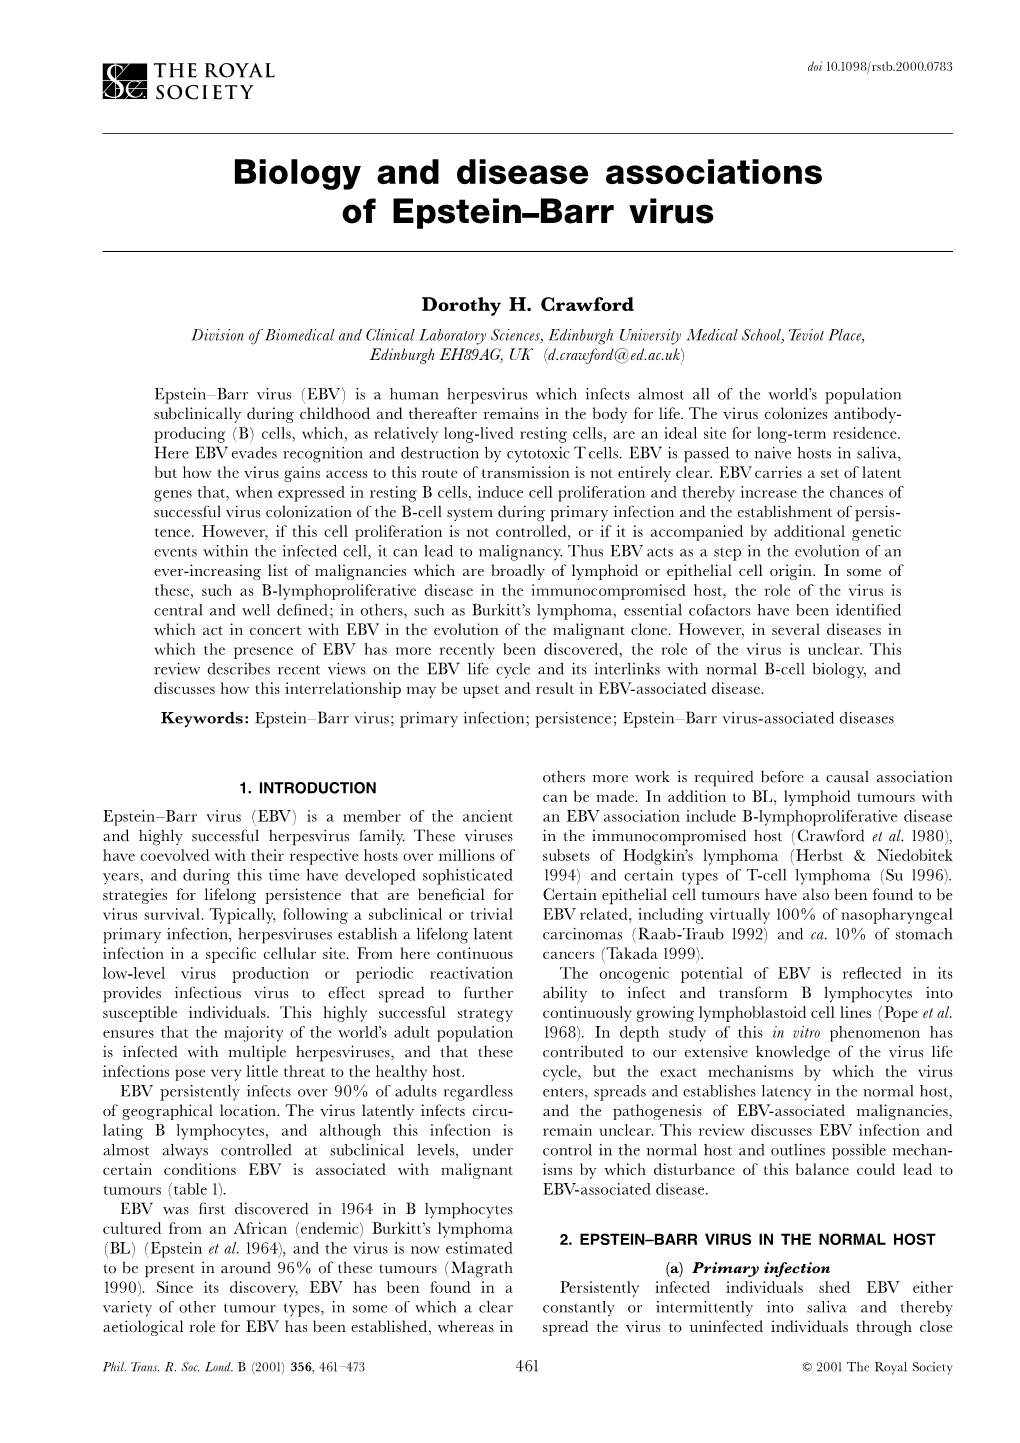 Biology and Disease Associations of Epstein±Barr Virus